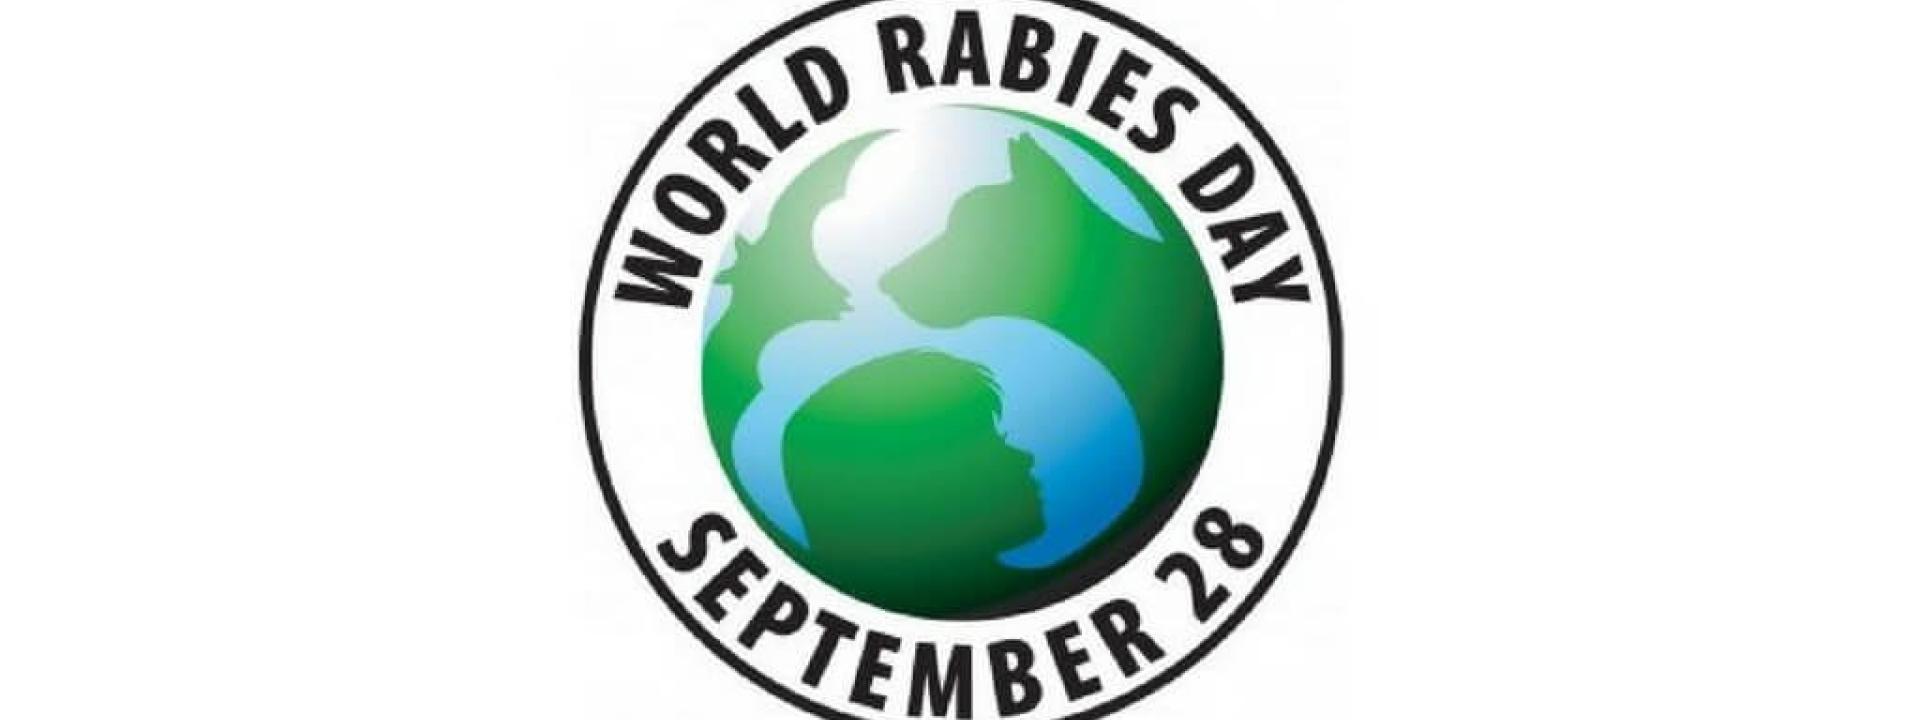 world-rabies-day-header.jpg